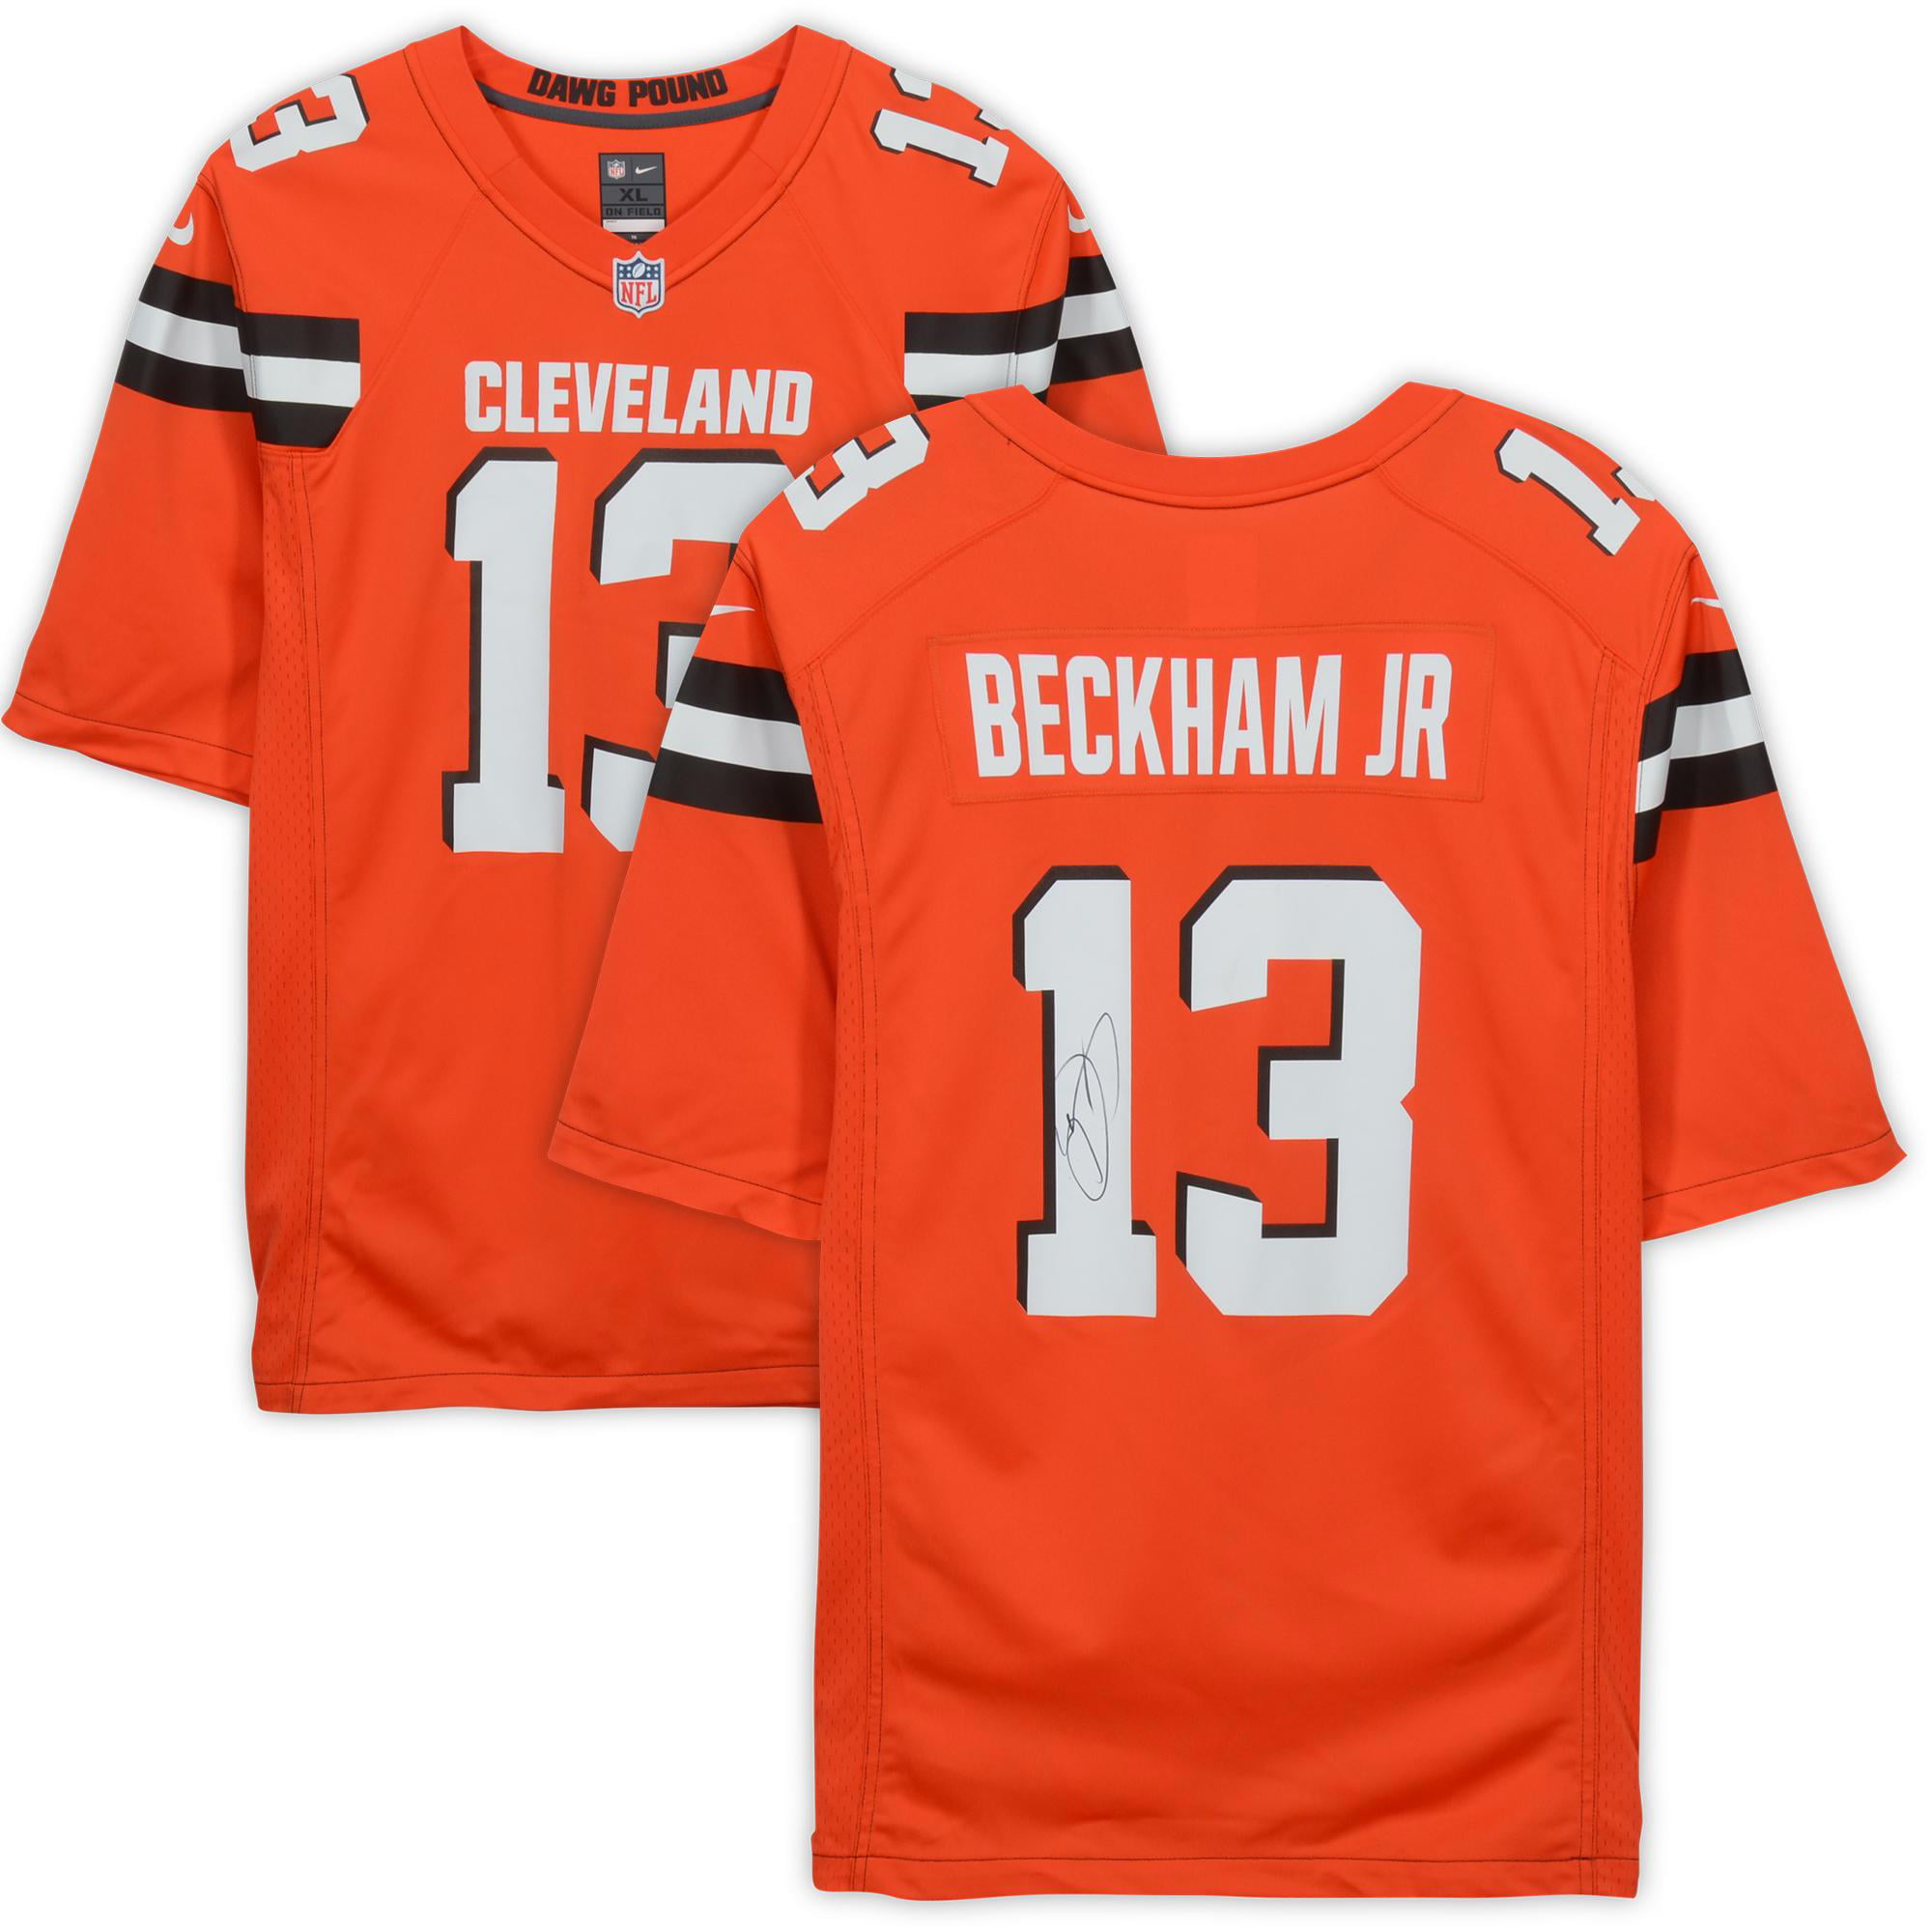 Odell Beckham Jr. Cleveland Browns Autographed Orange Game Jersey - Fanatics Authentic Certified - Walmart.com